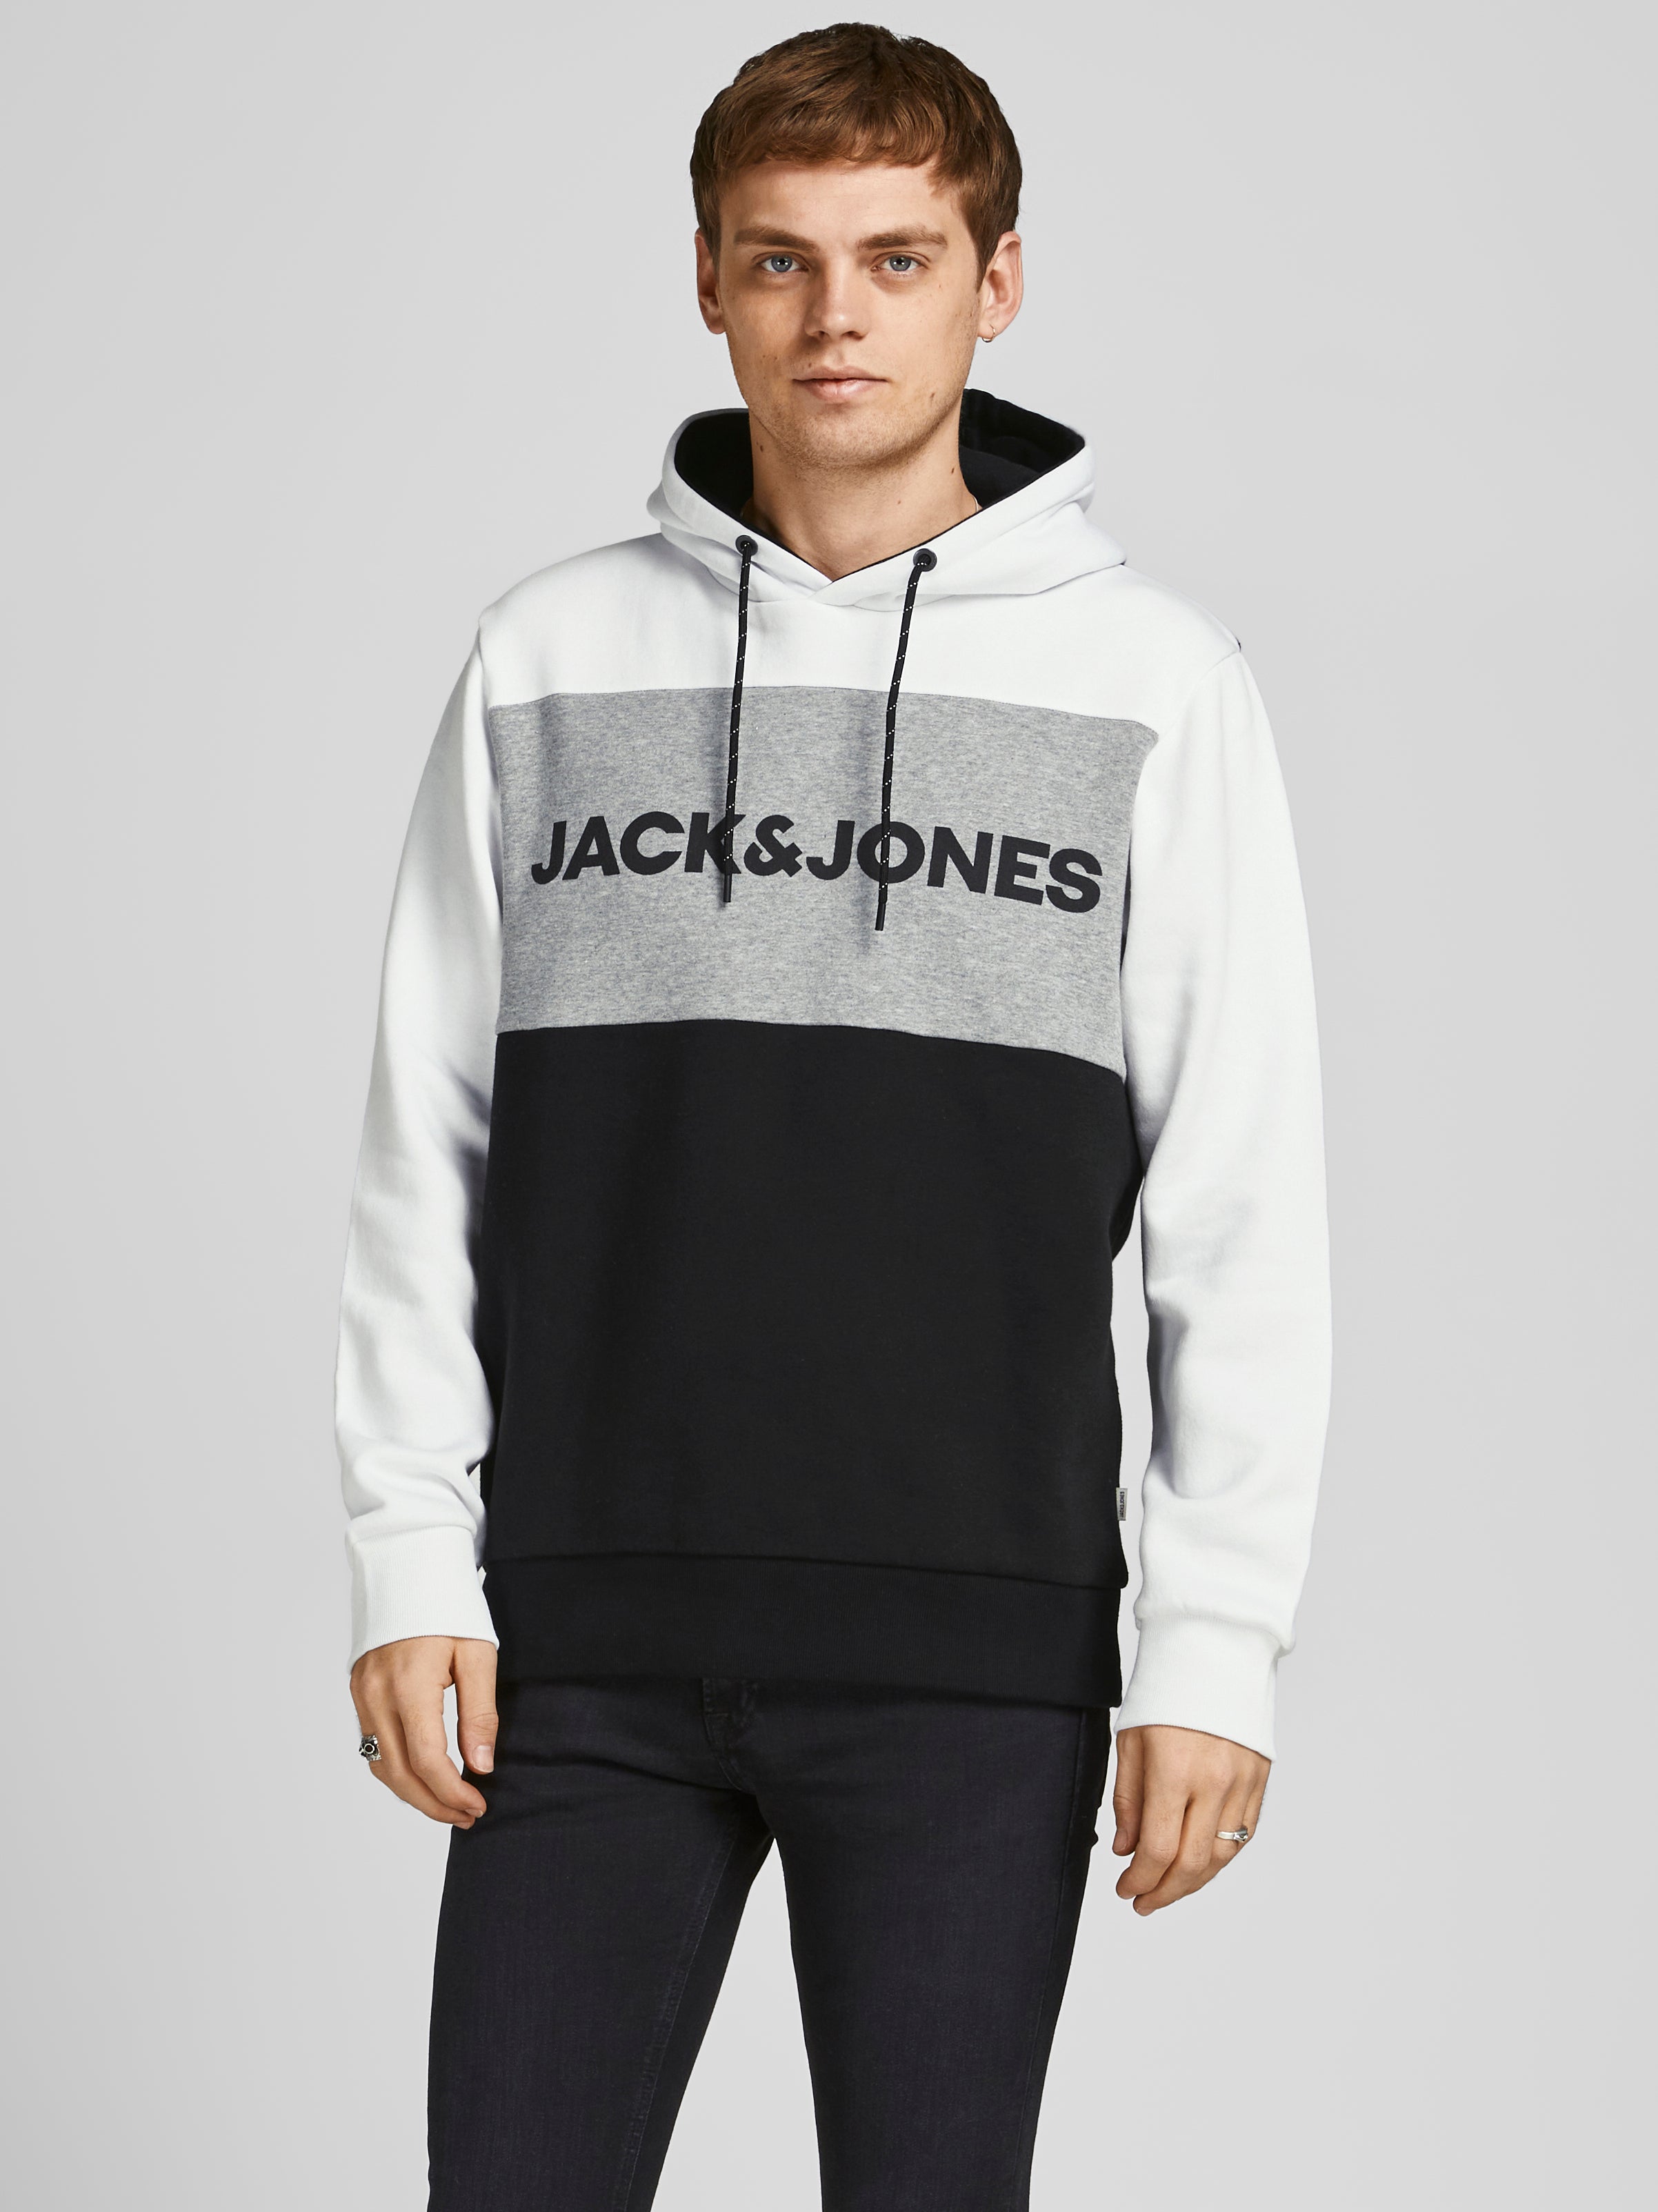 KINDER Pullovers & Sweatshirts Sport Jack & Jones sweatshirt Rot 164 Rabatt 57 % 